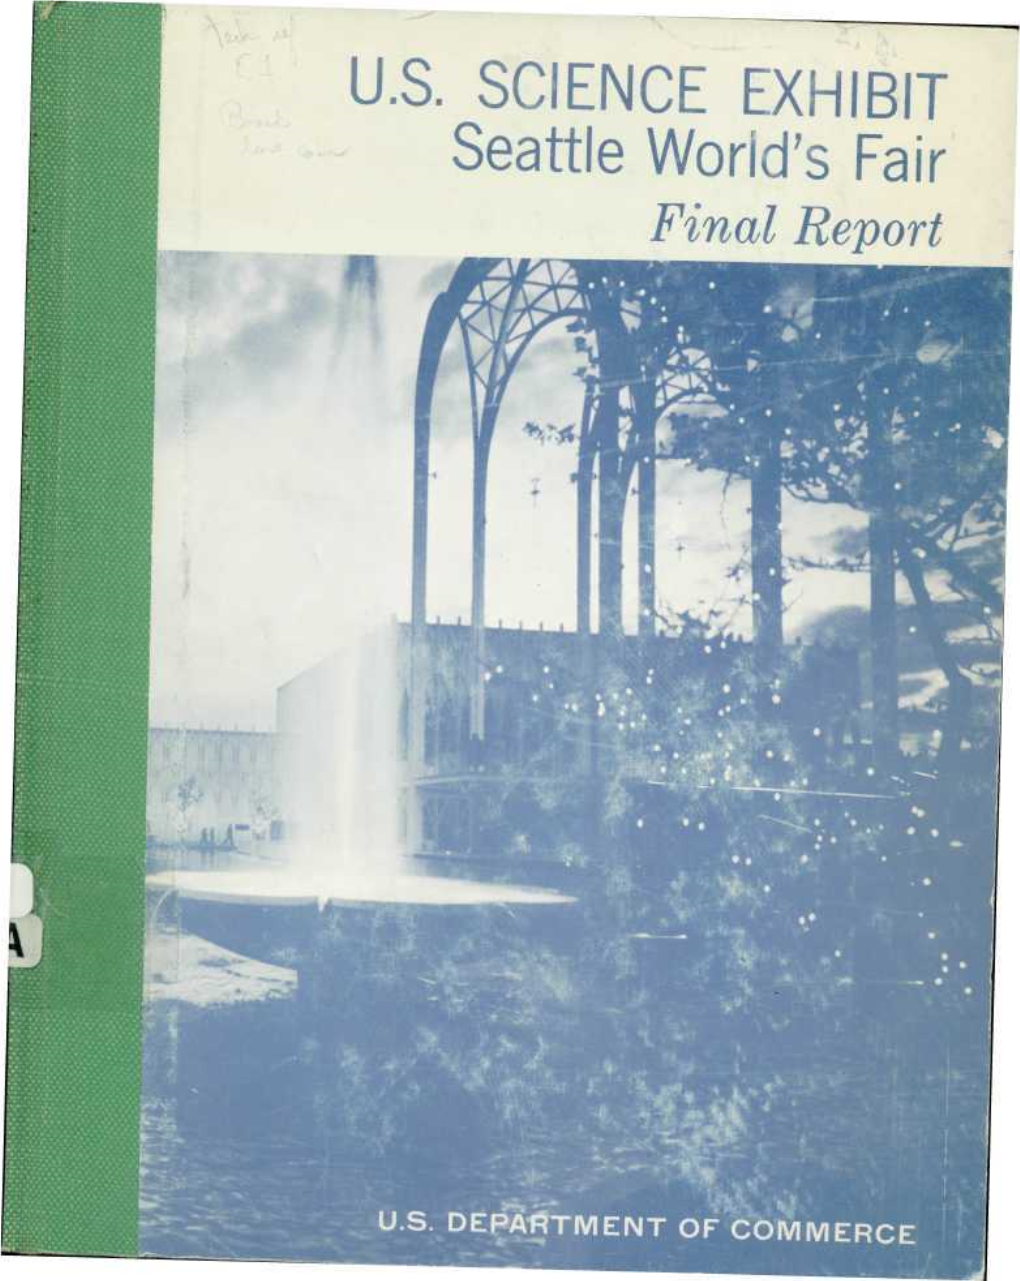 U.S. SCIENCE EXHIBIT Seattle World's Fair Final Report